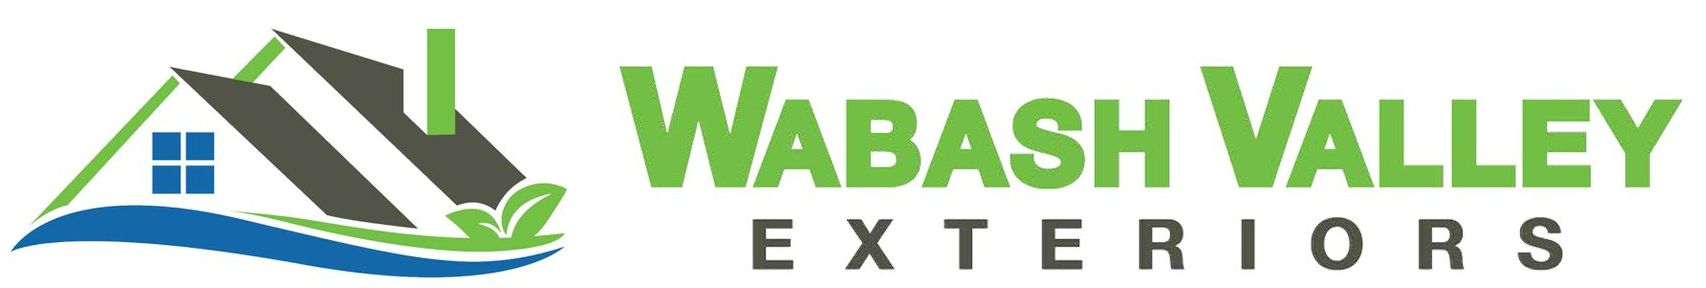 Wabash Valley Exteriors - Logo